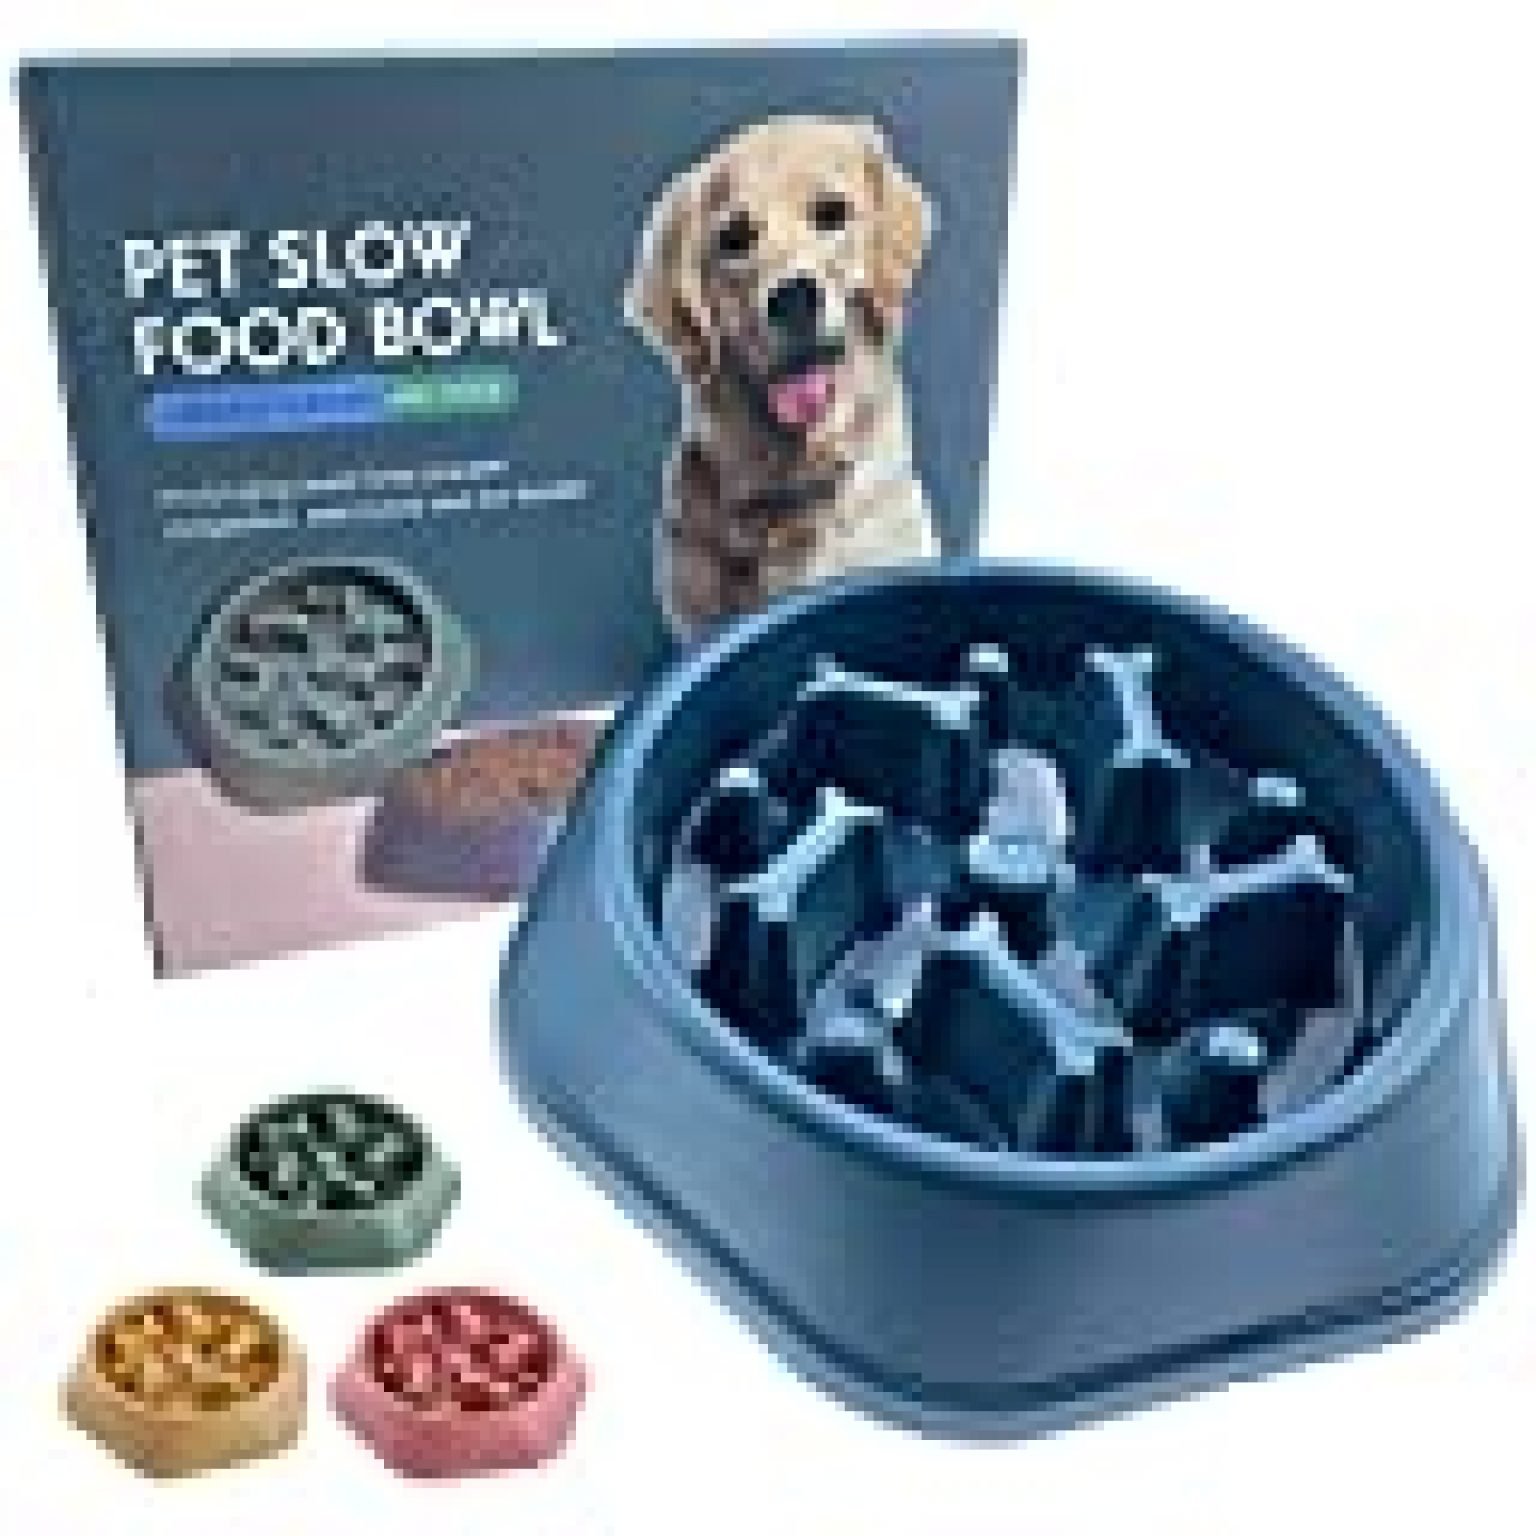 slow feeder dog bowl